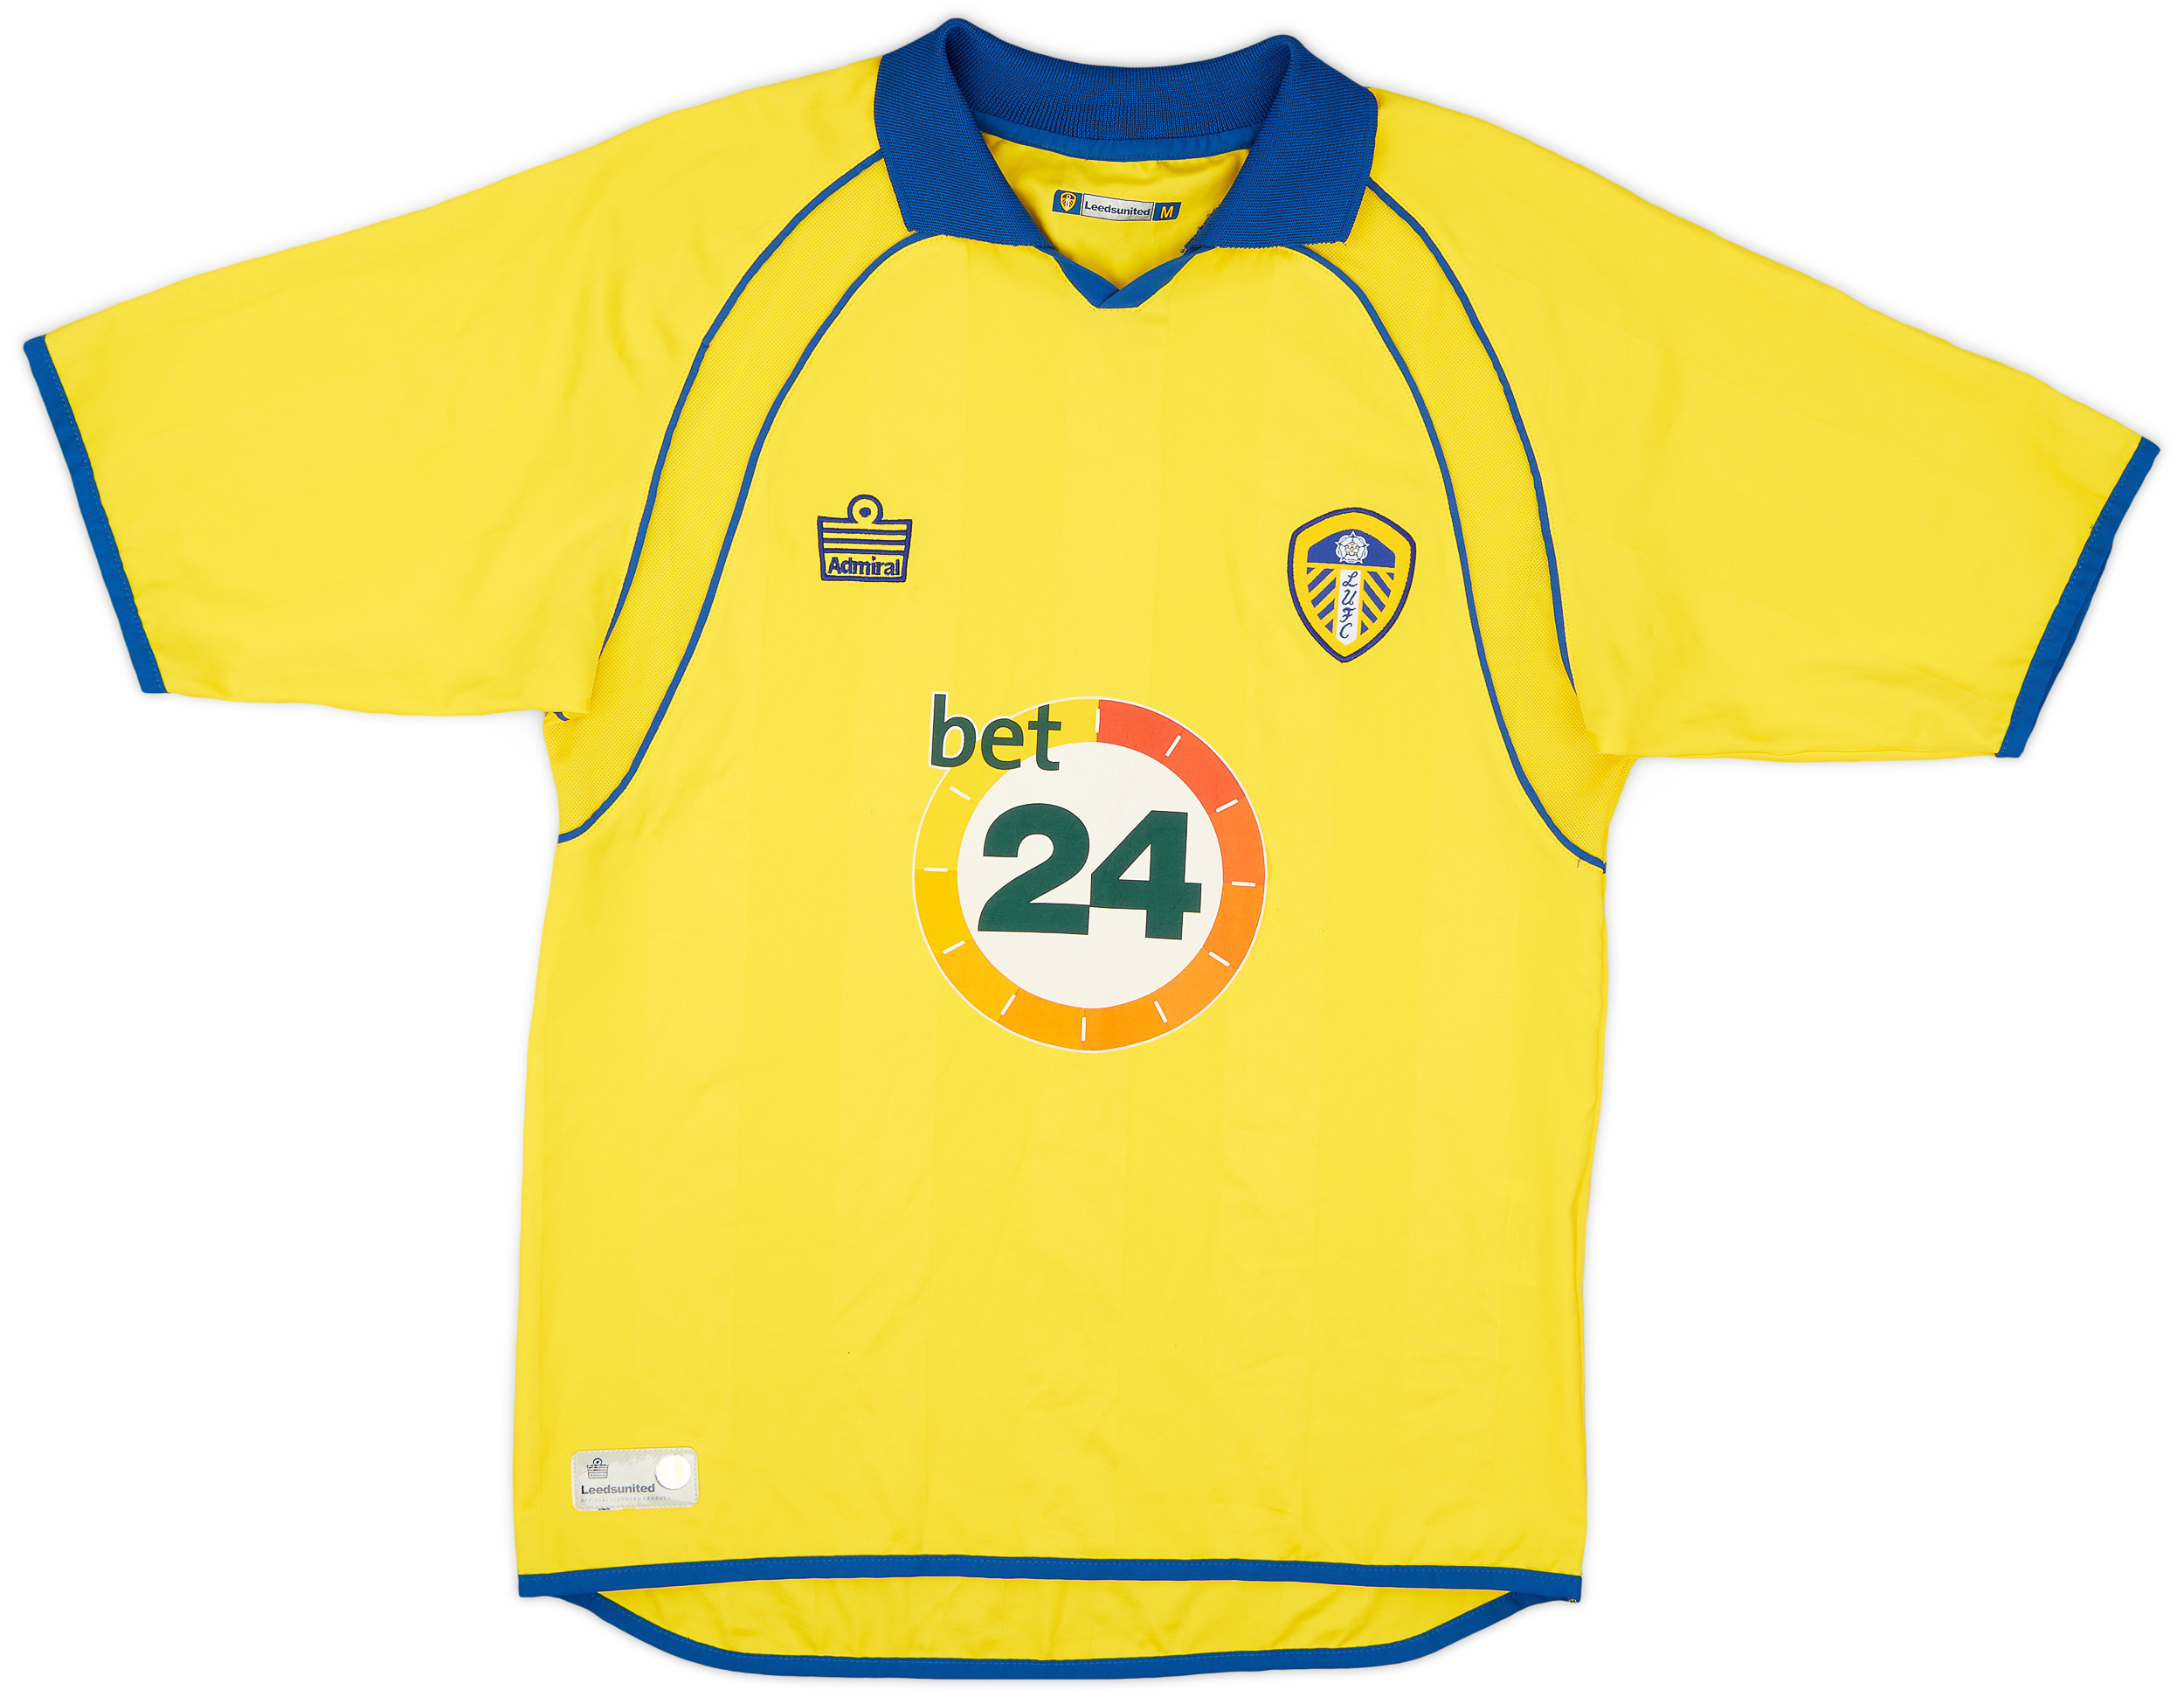 2006-07 Leeds United Away Shirt - 5/10 - ()